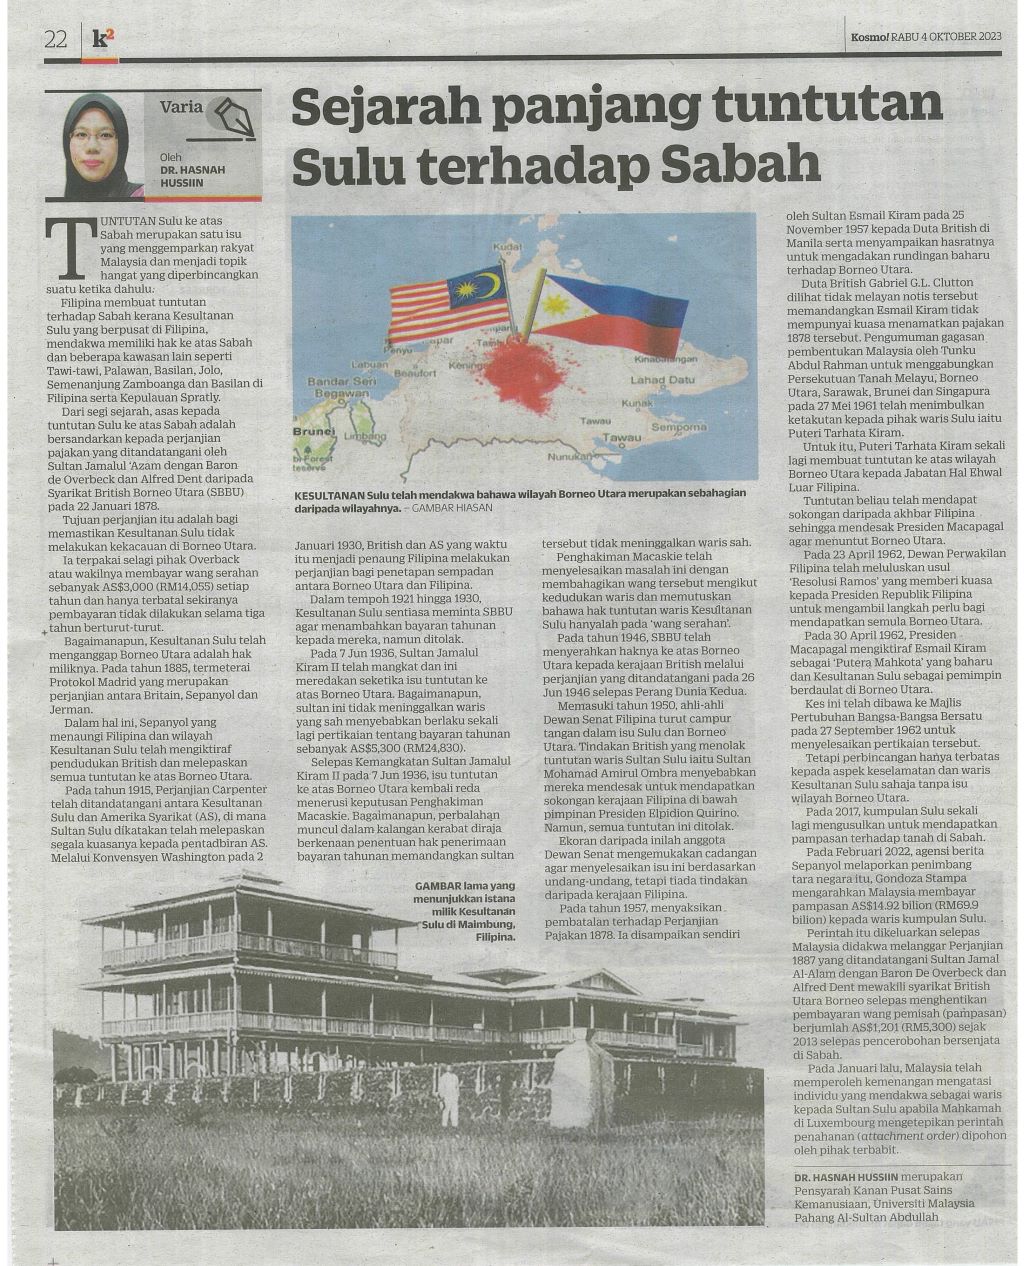 Sejarah panjang tuntutan Sulu terhadap Sabah